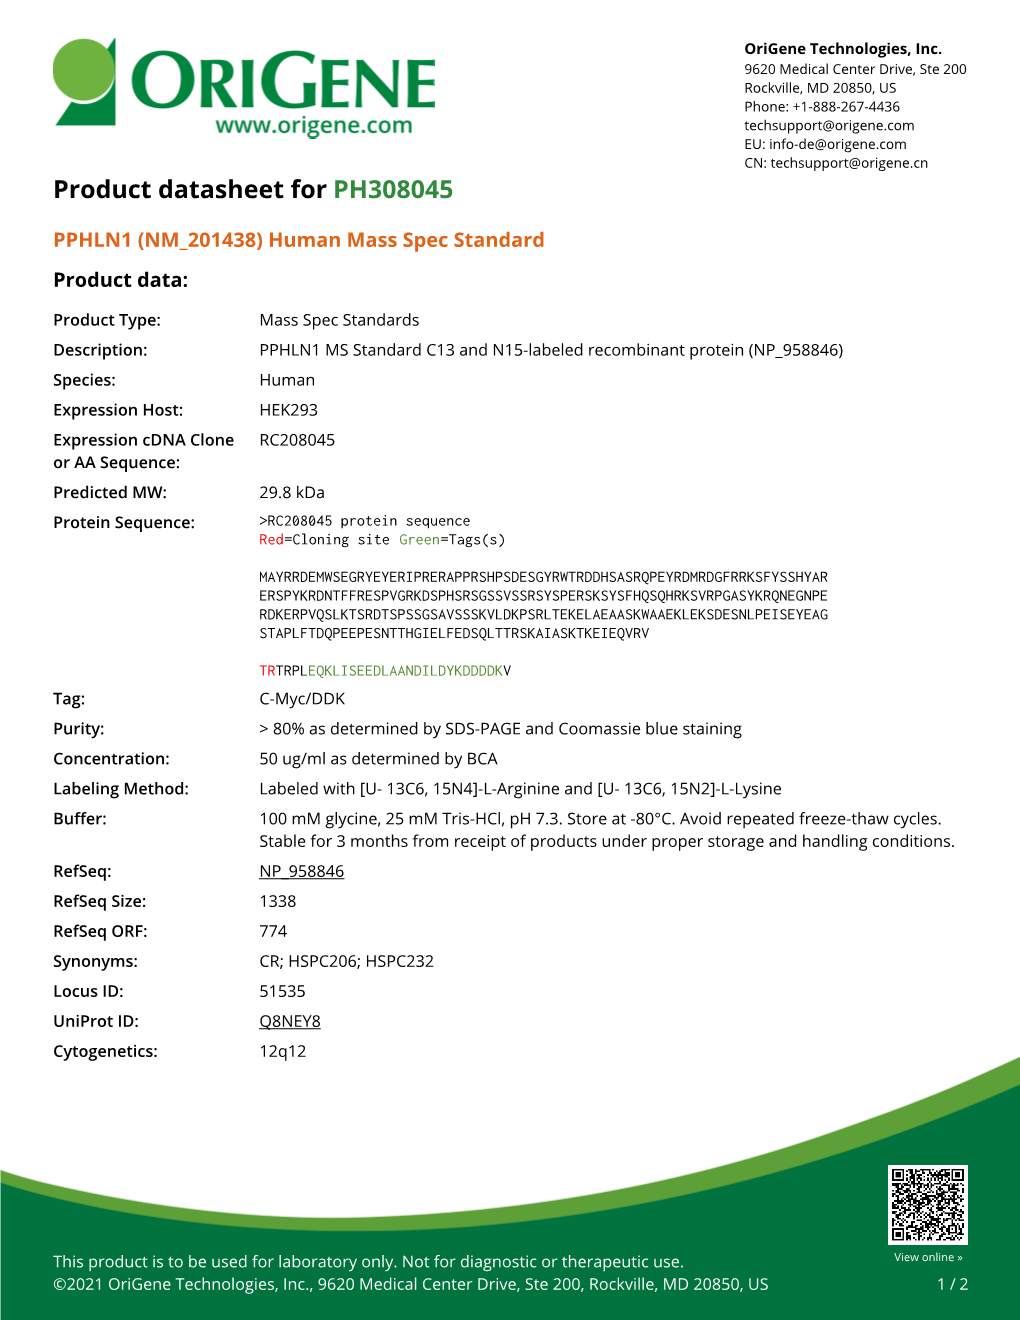 PPHLN1 (NM 201438) Human Mass Spec Standard Product Data